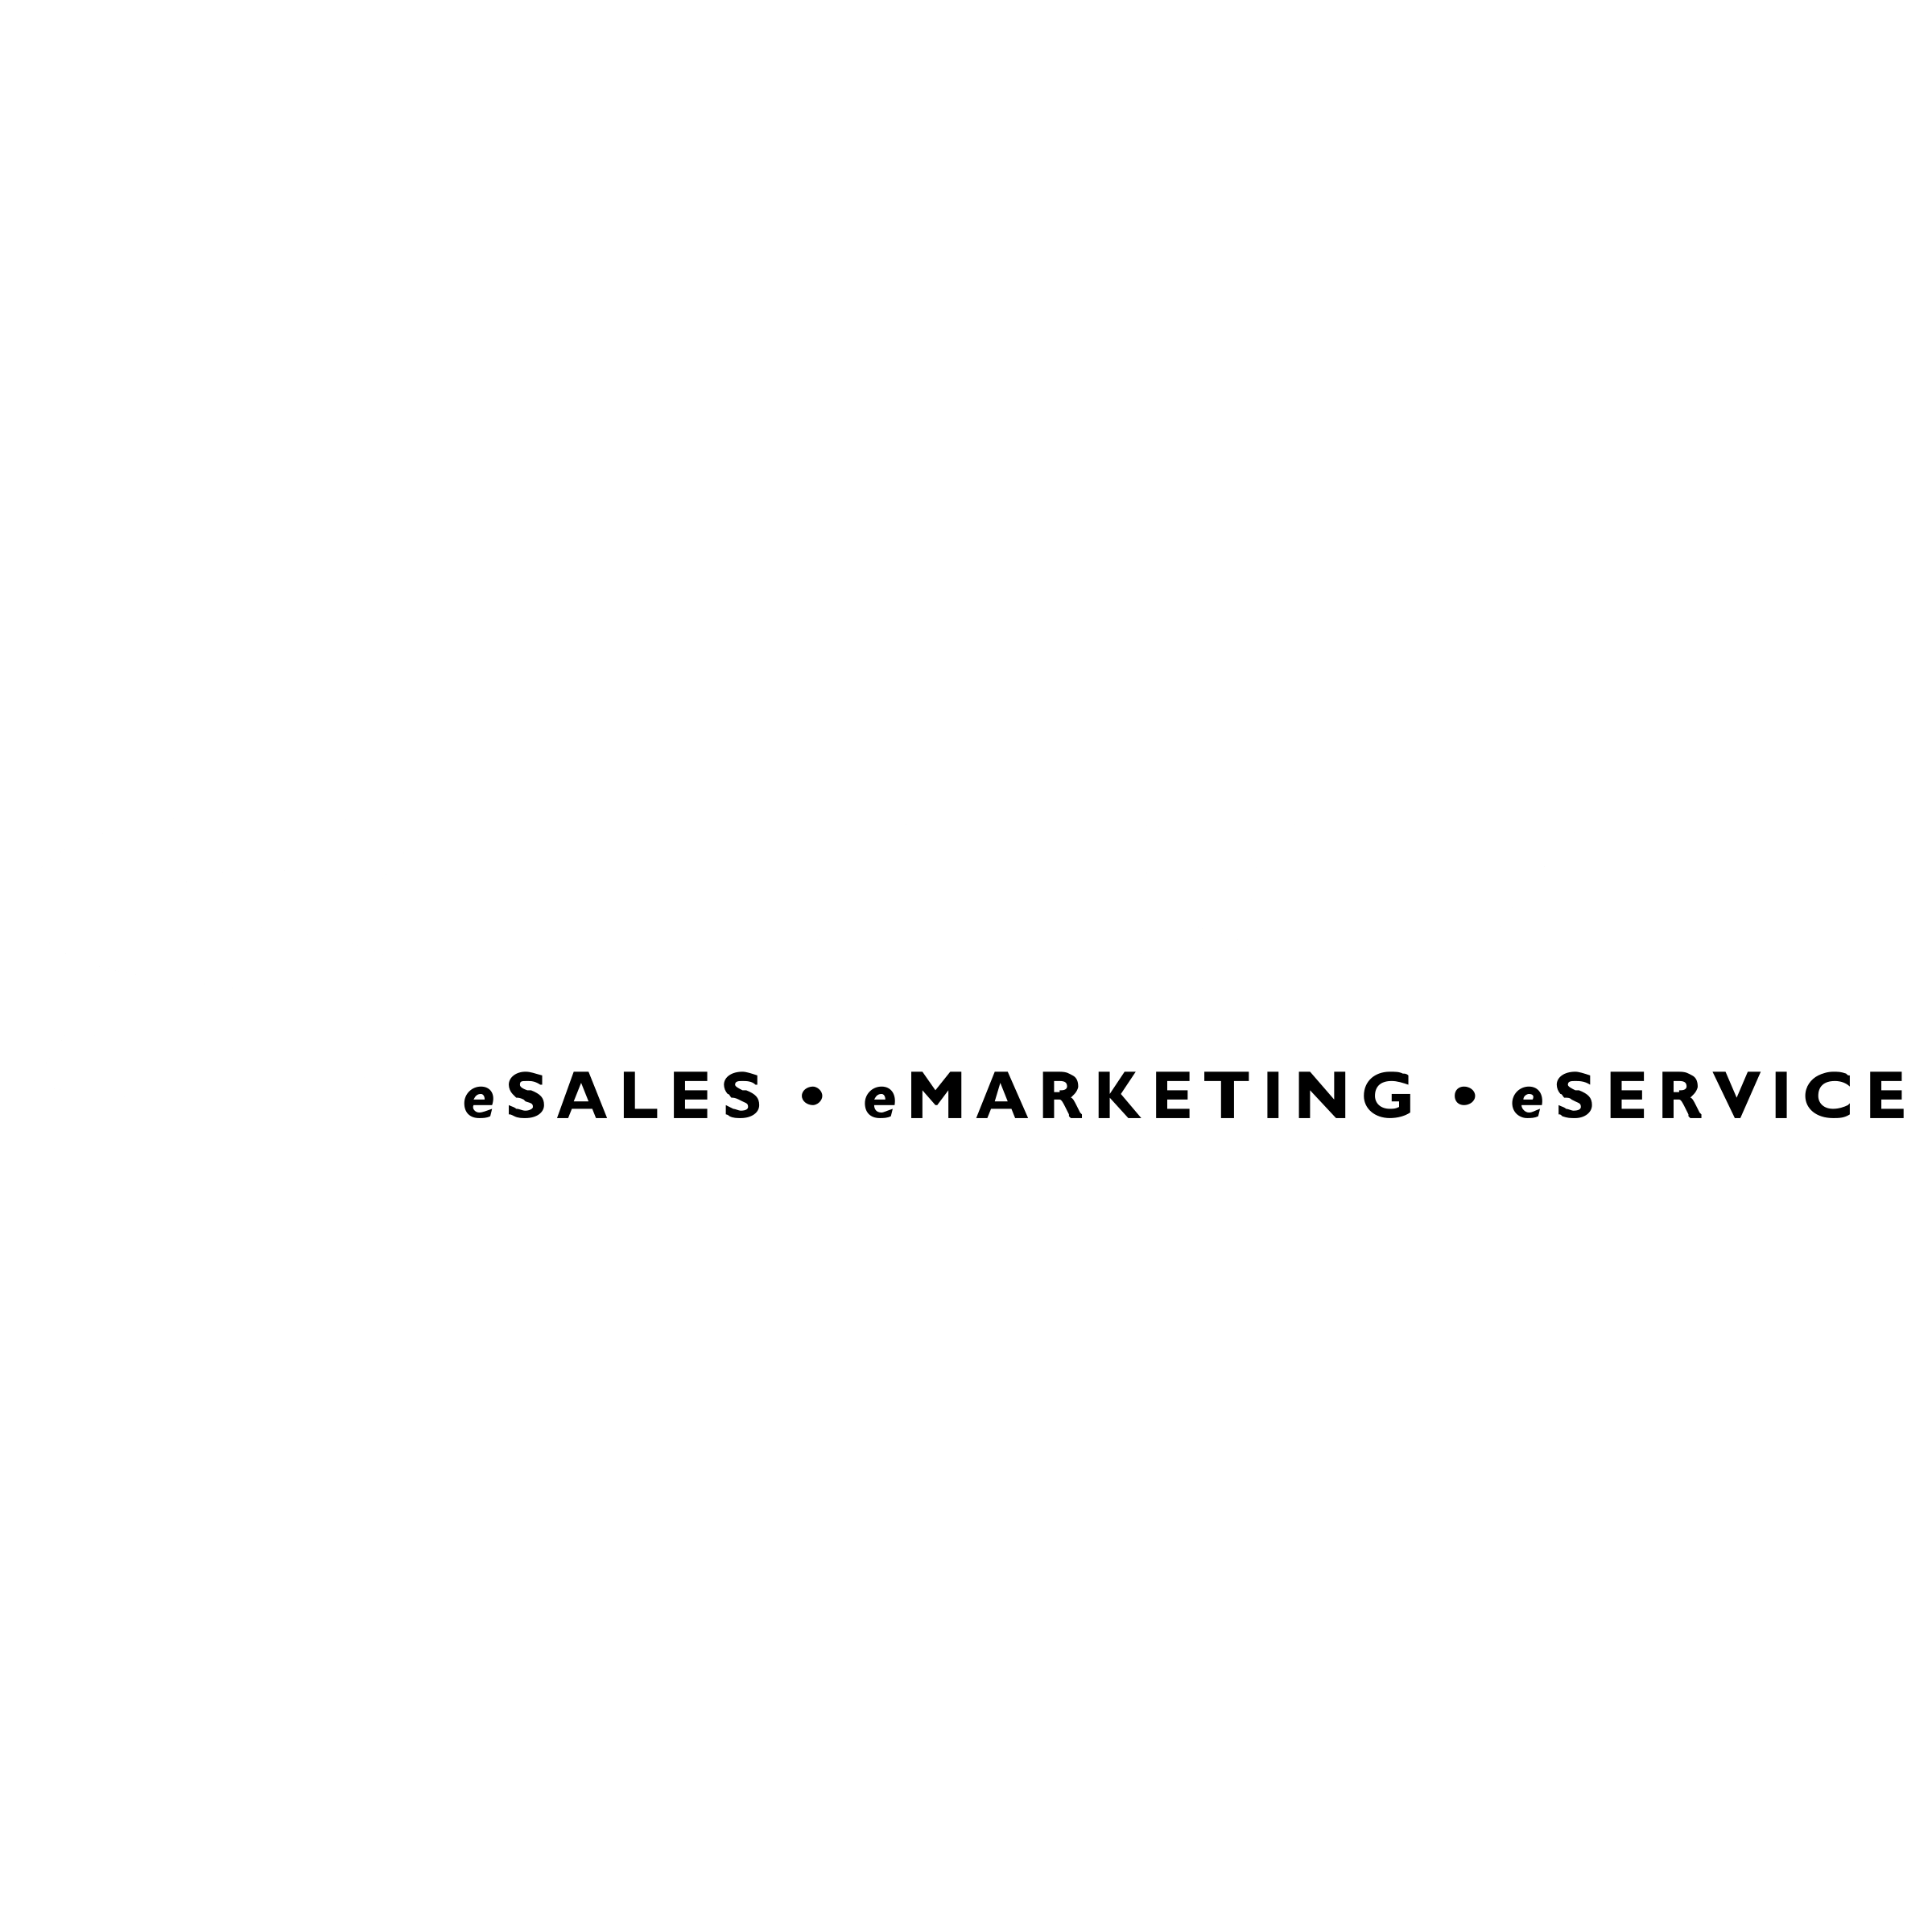 Siebel Logo - Siebel Logo PNG Transparent & SVG Vector - Freebie Supply